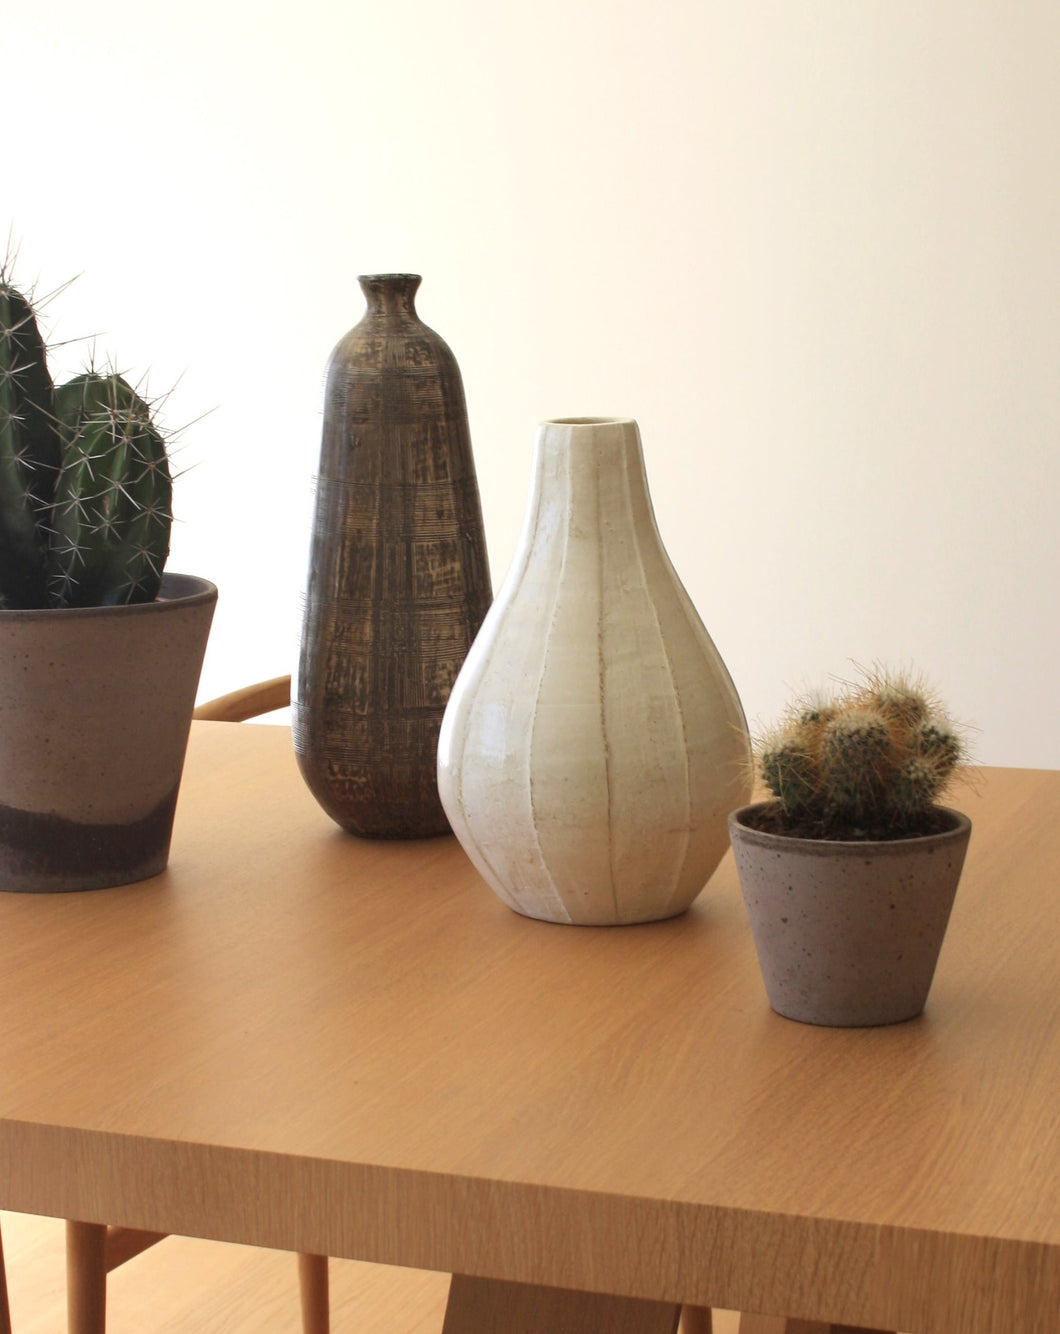 Studio ceramic vessel in white. Shop the range of hand sourced ceramics and glassware by Rebecca Arts online.